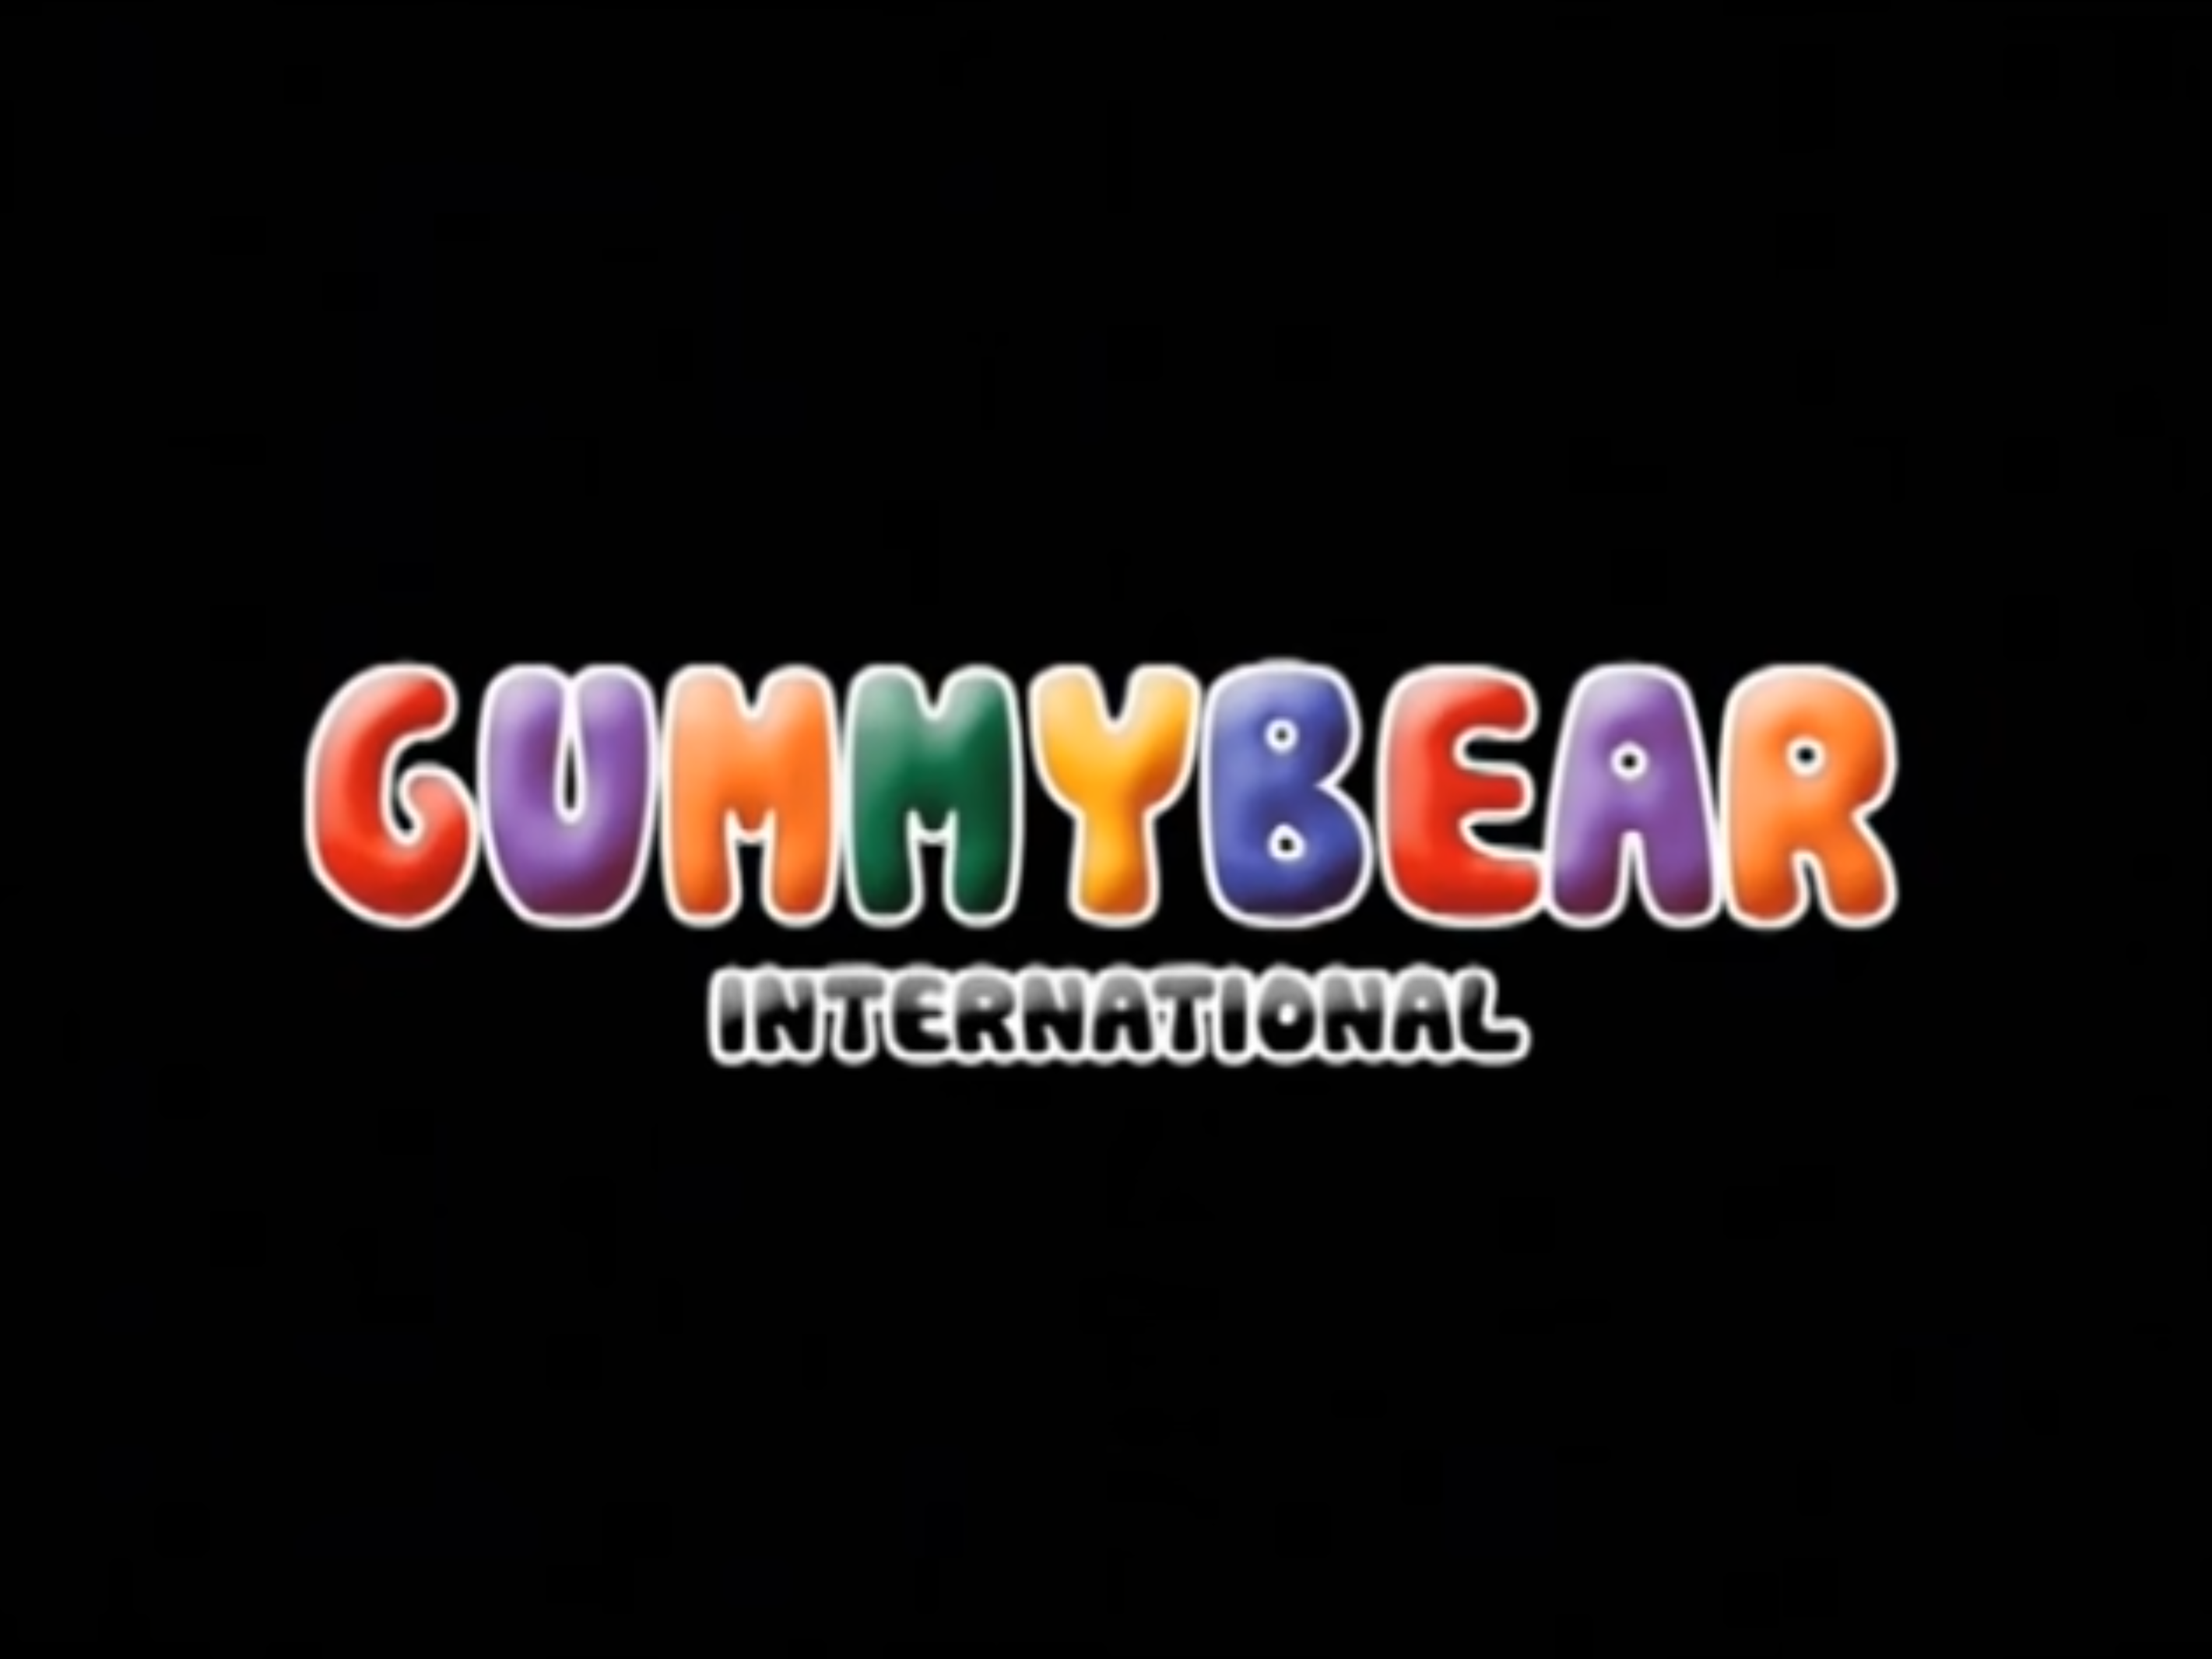 Gummy bear baby. Gummy Bear International. Беби тайм. Gummybear International logo. Gummy логотип.